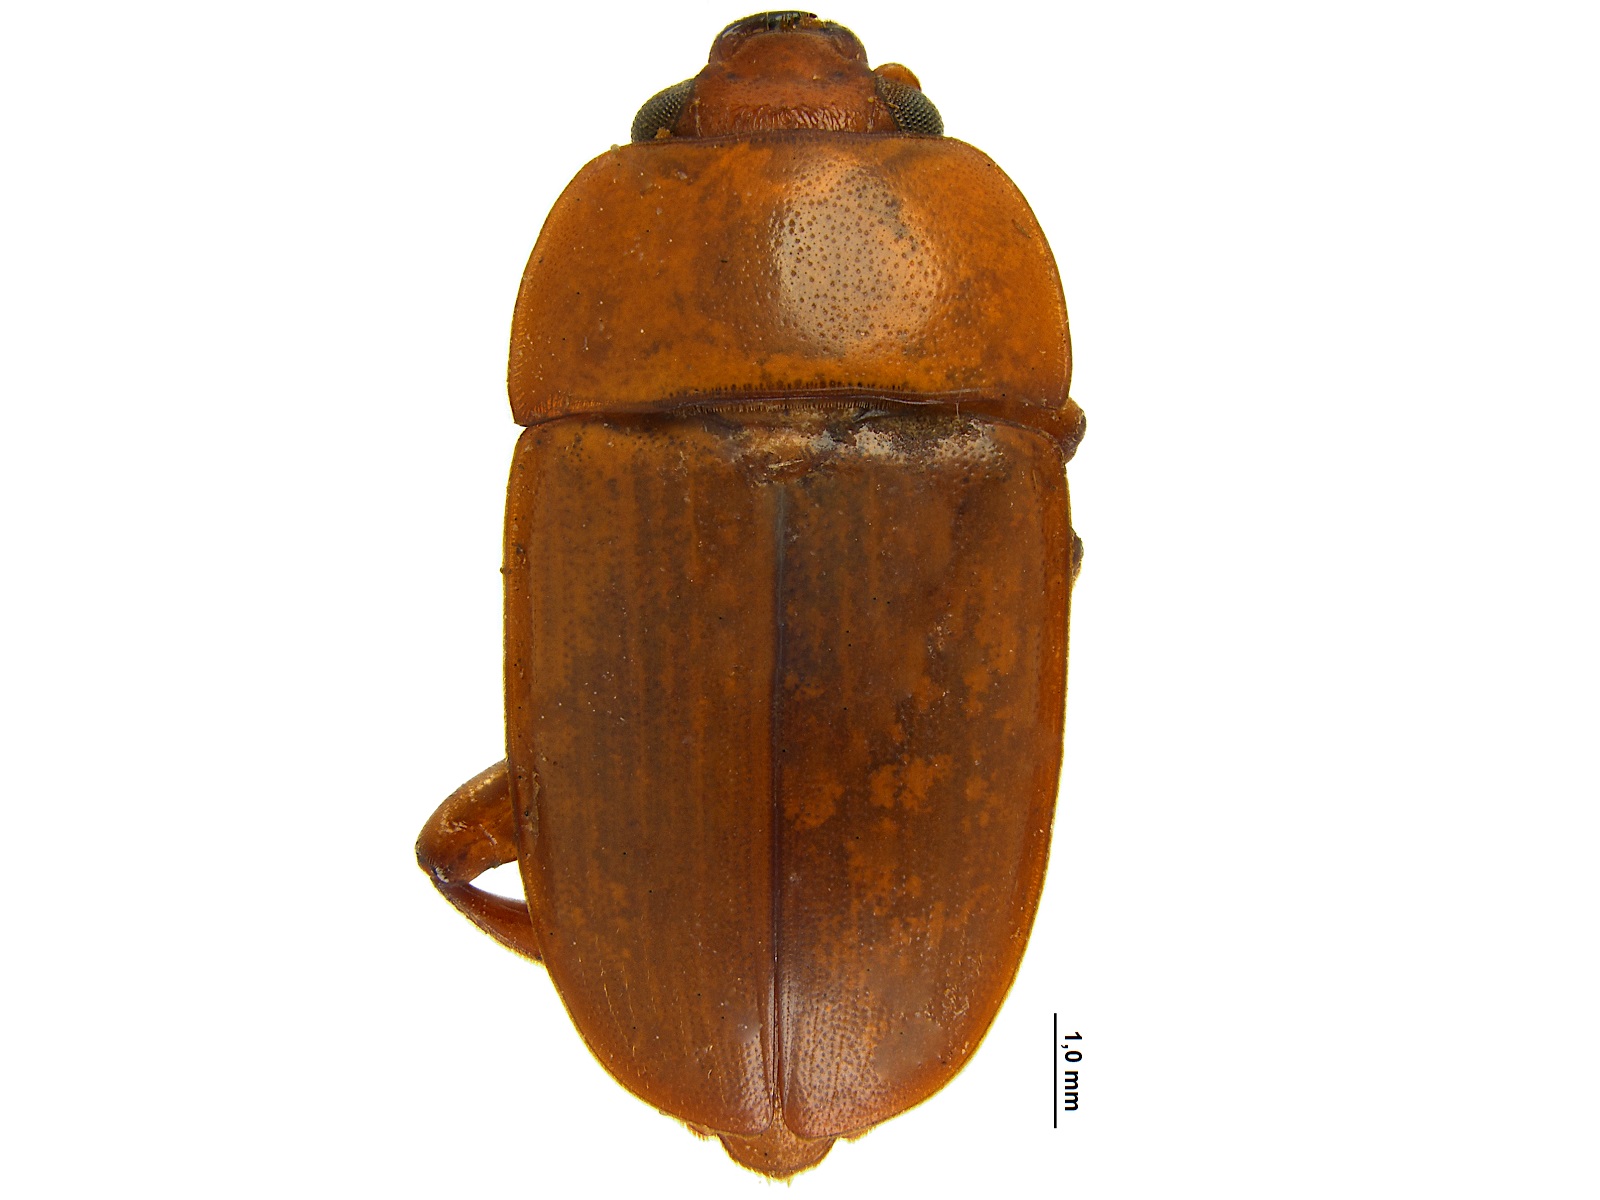 Lasiodactylus brunneus Perty, 1830 